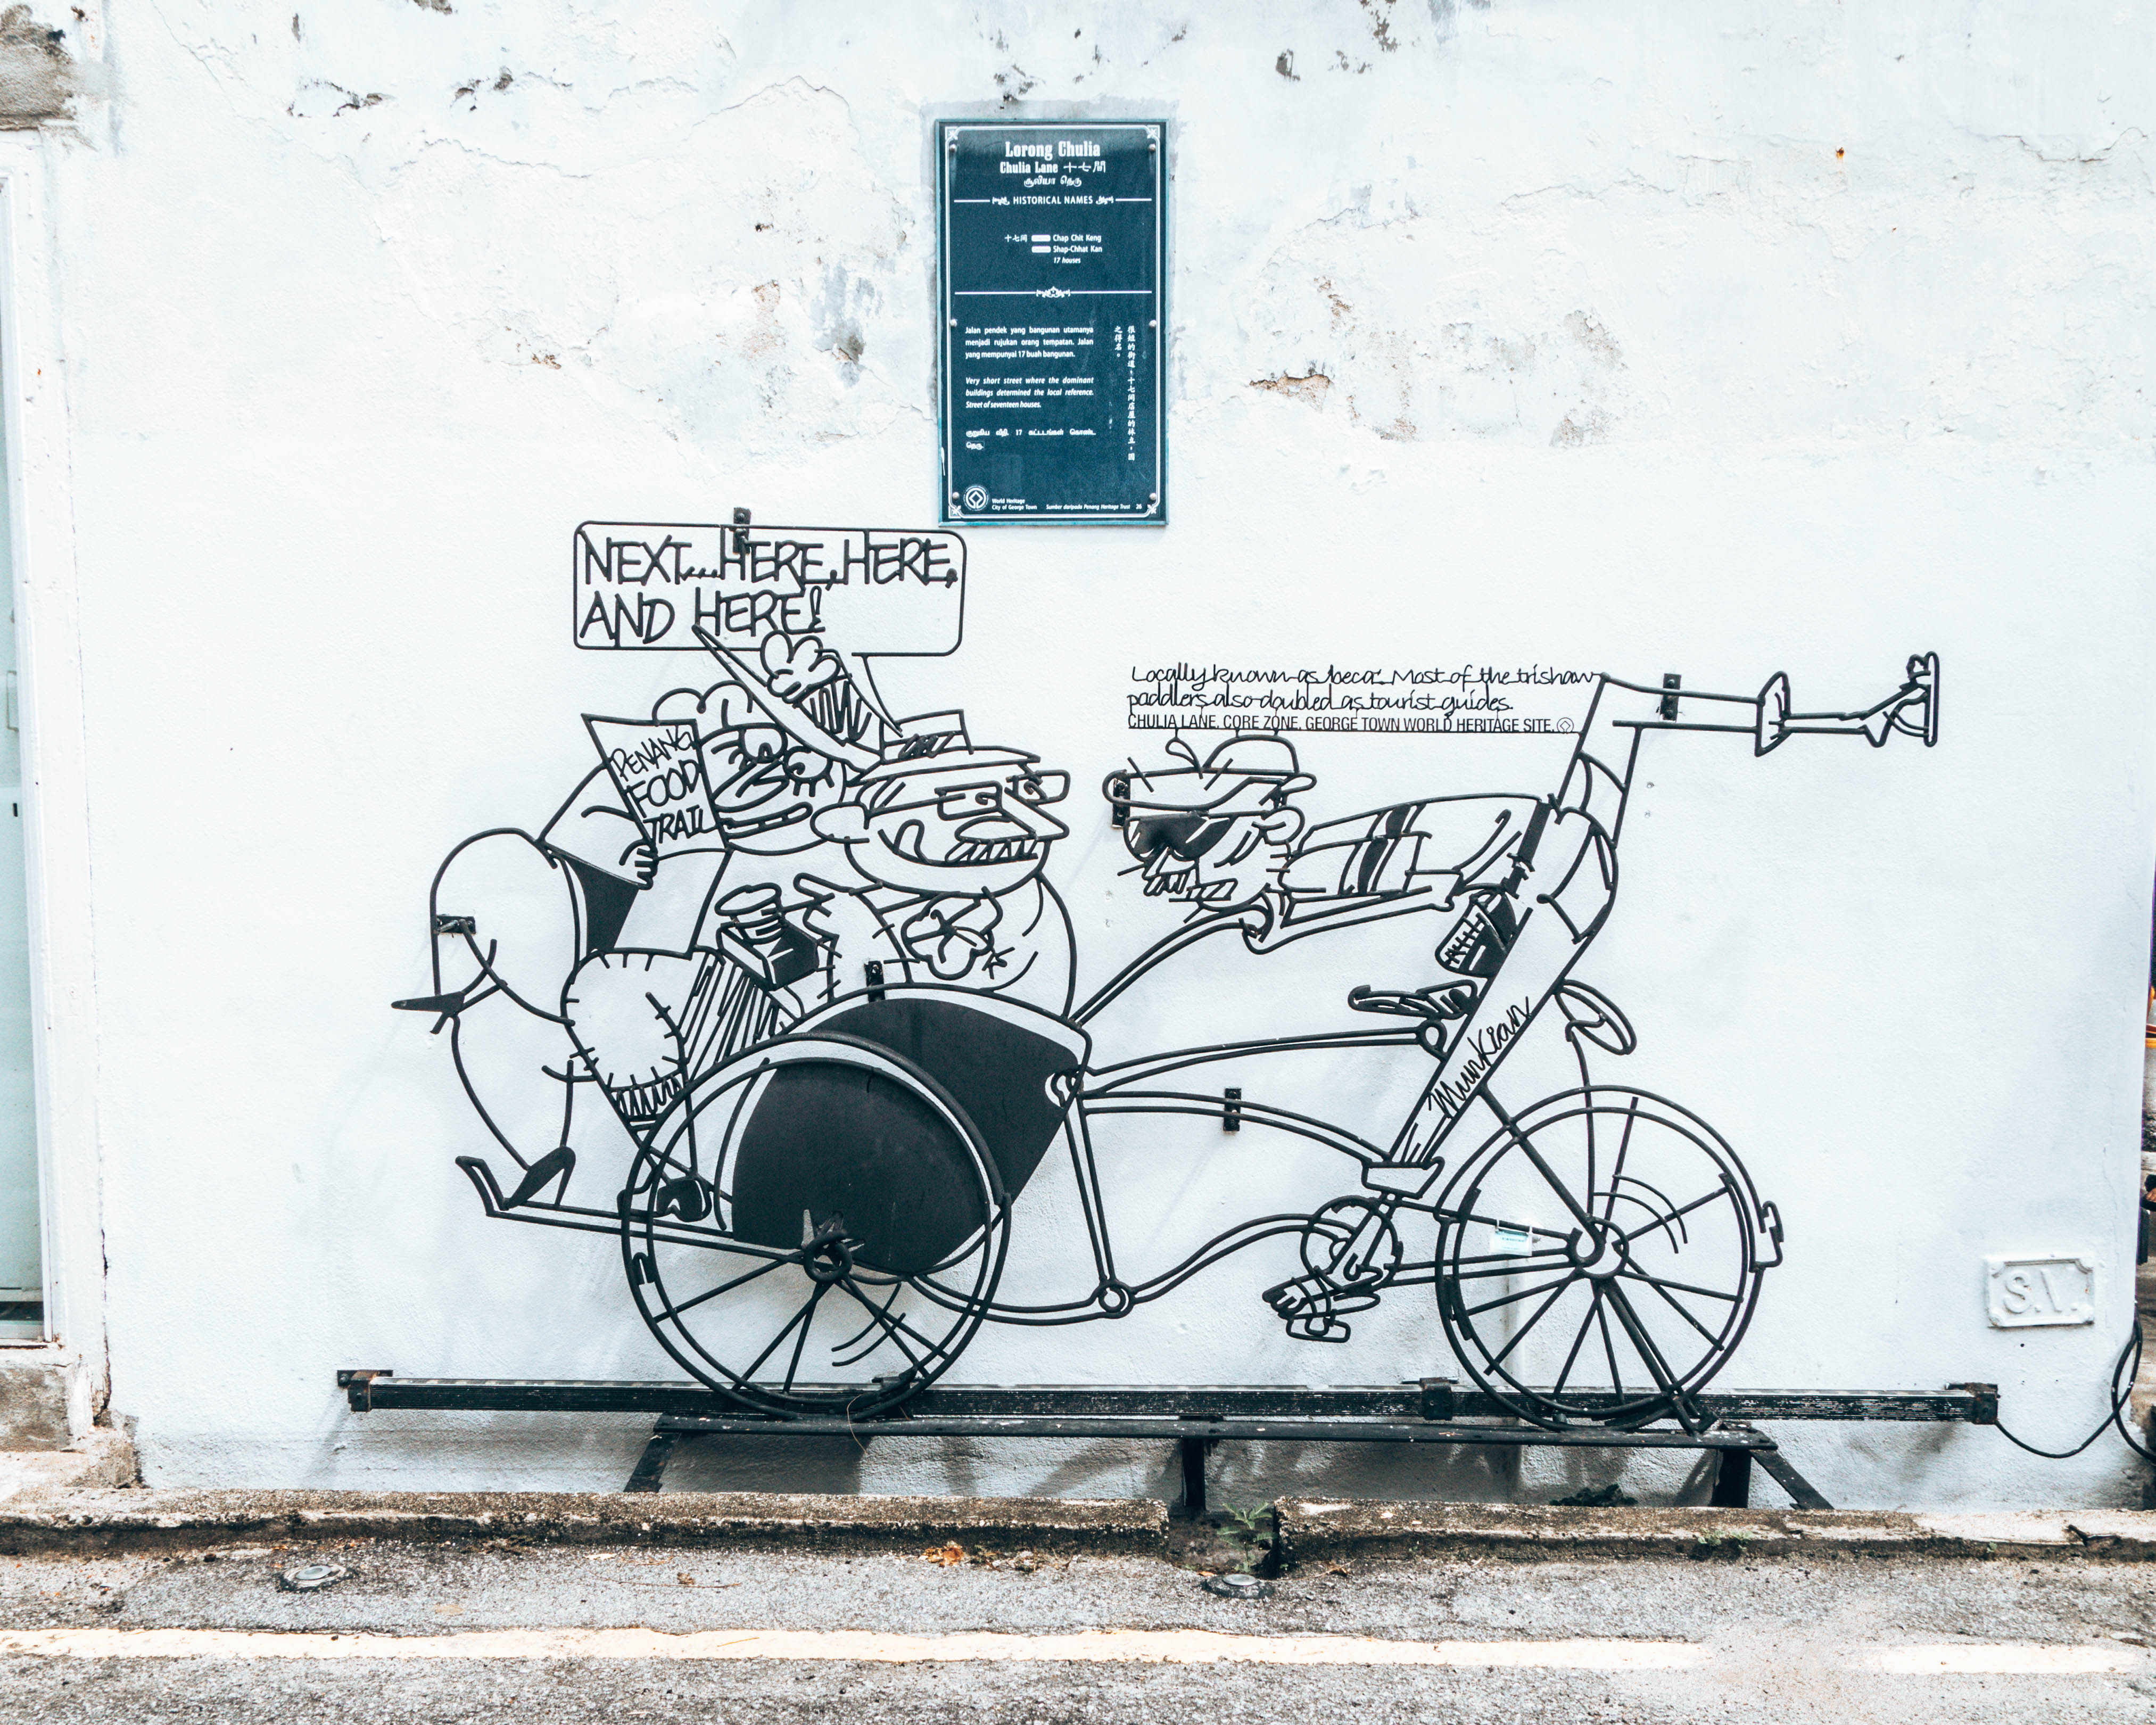 Voice of the people by Tang Mun Kian. Street art in Penang, Georgetown, Malaysia - Wediditourway.com